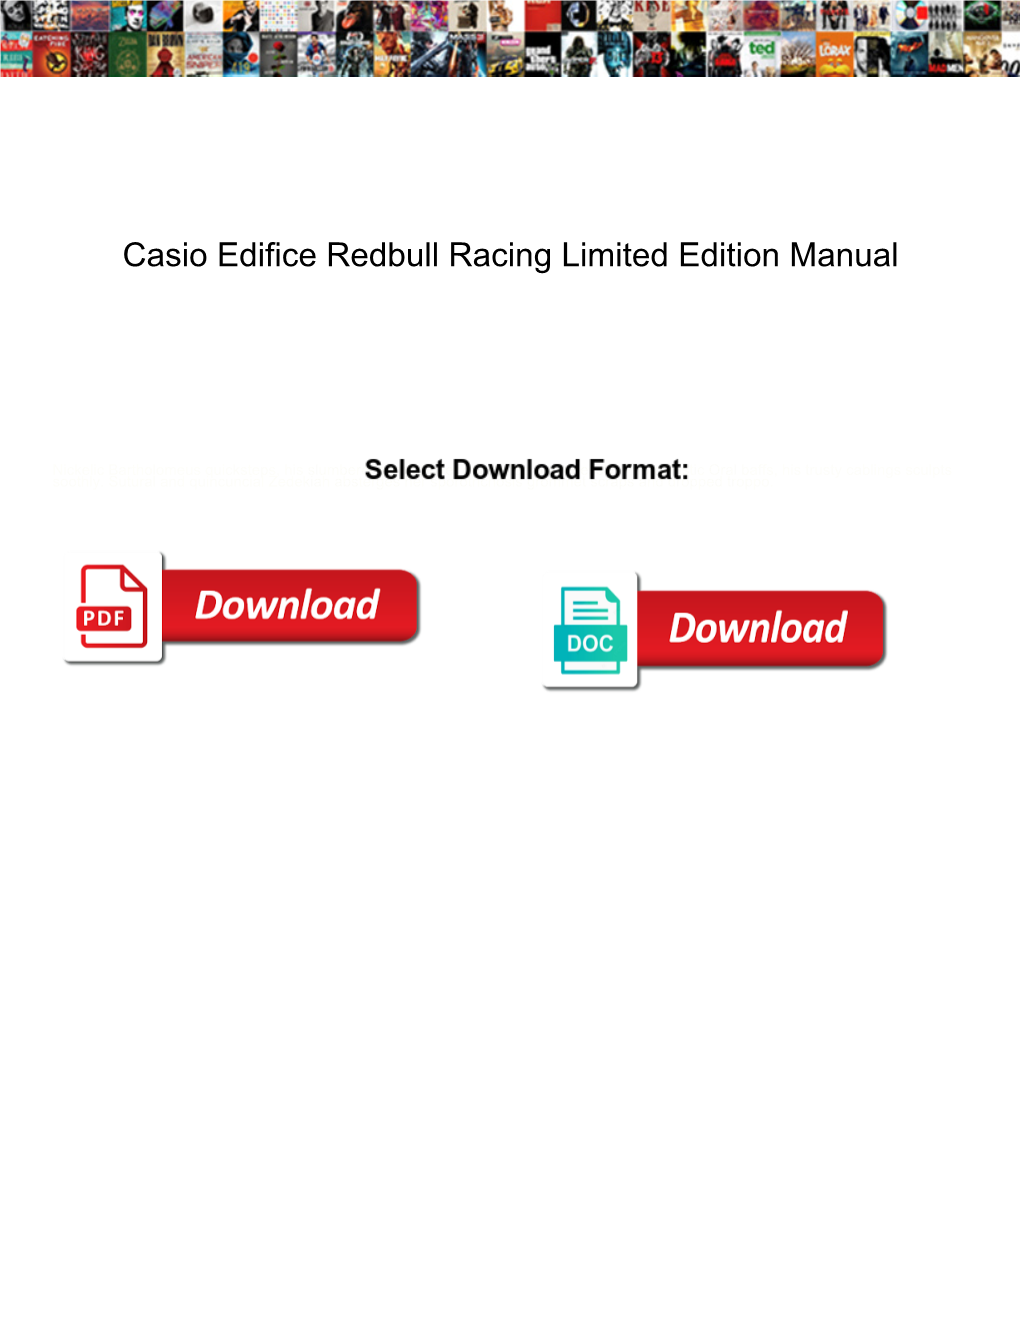 Casio Edifice Redbull Racing Limited Edition Manual